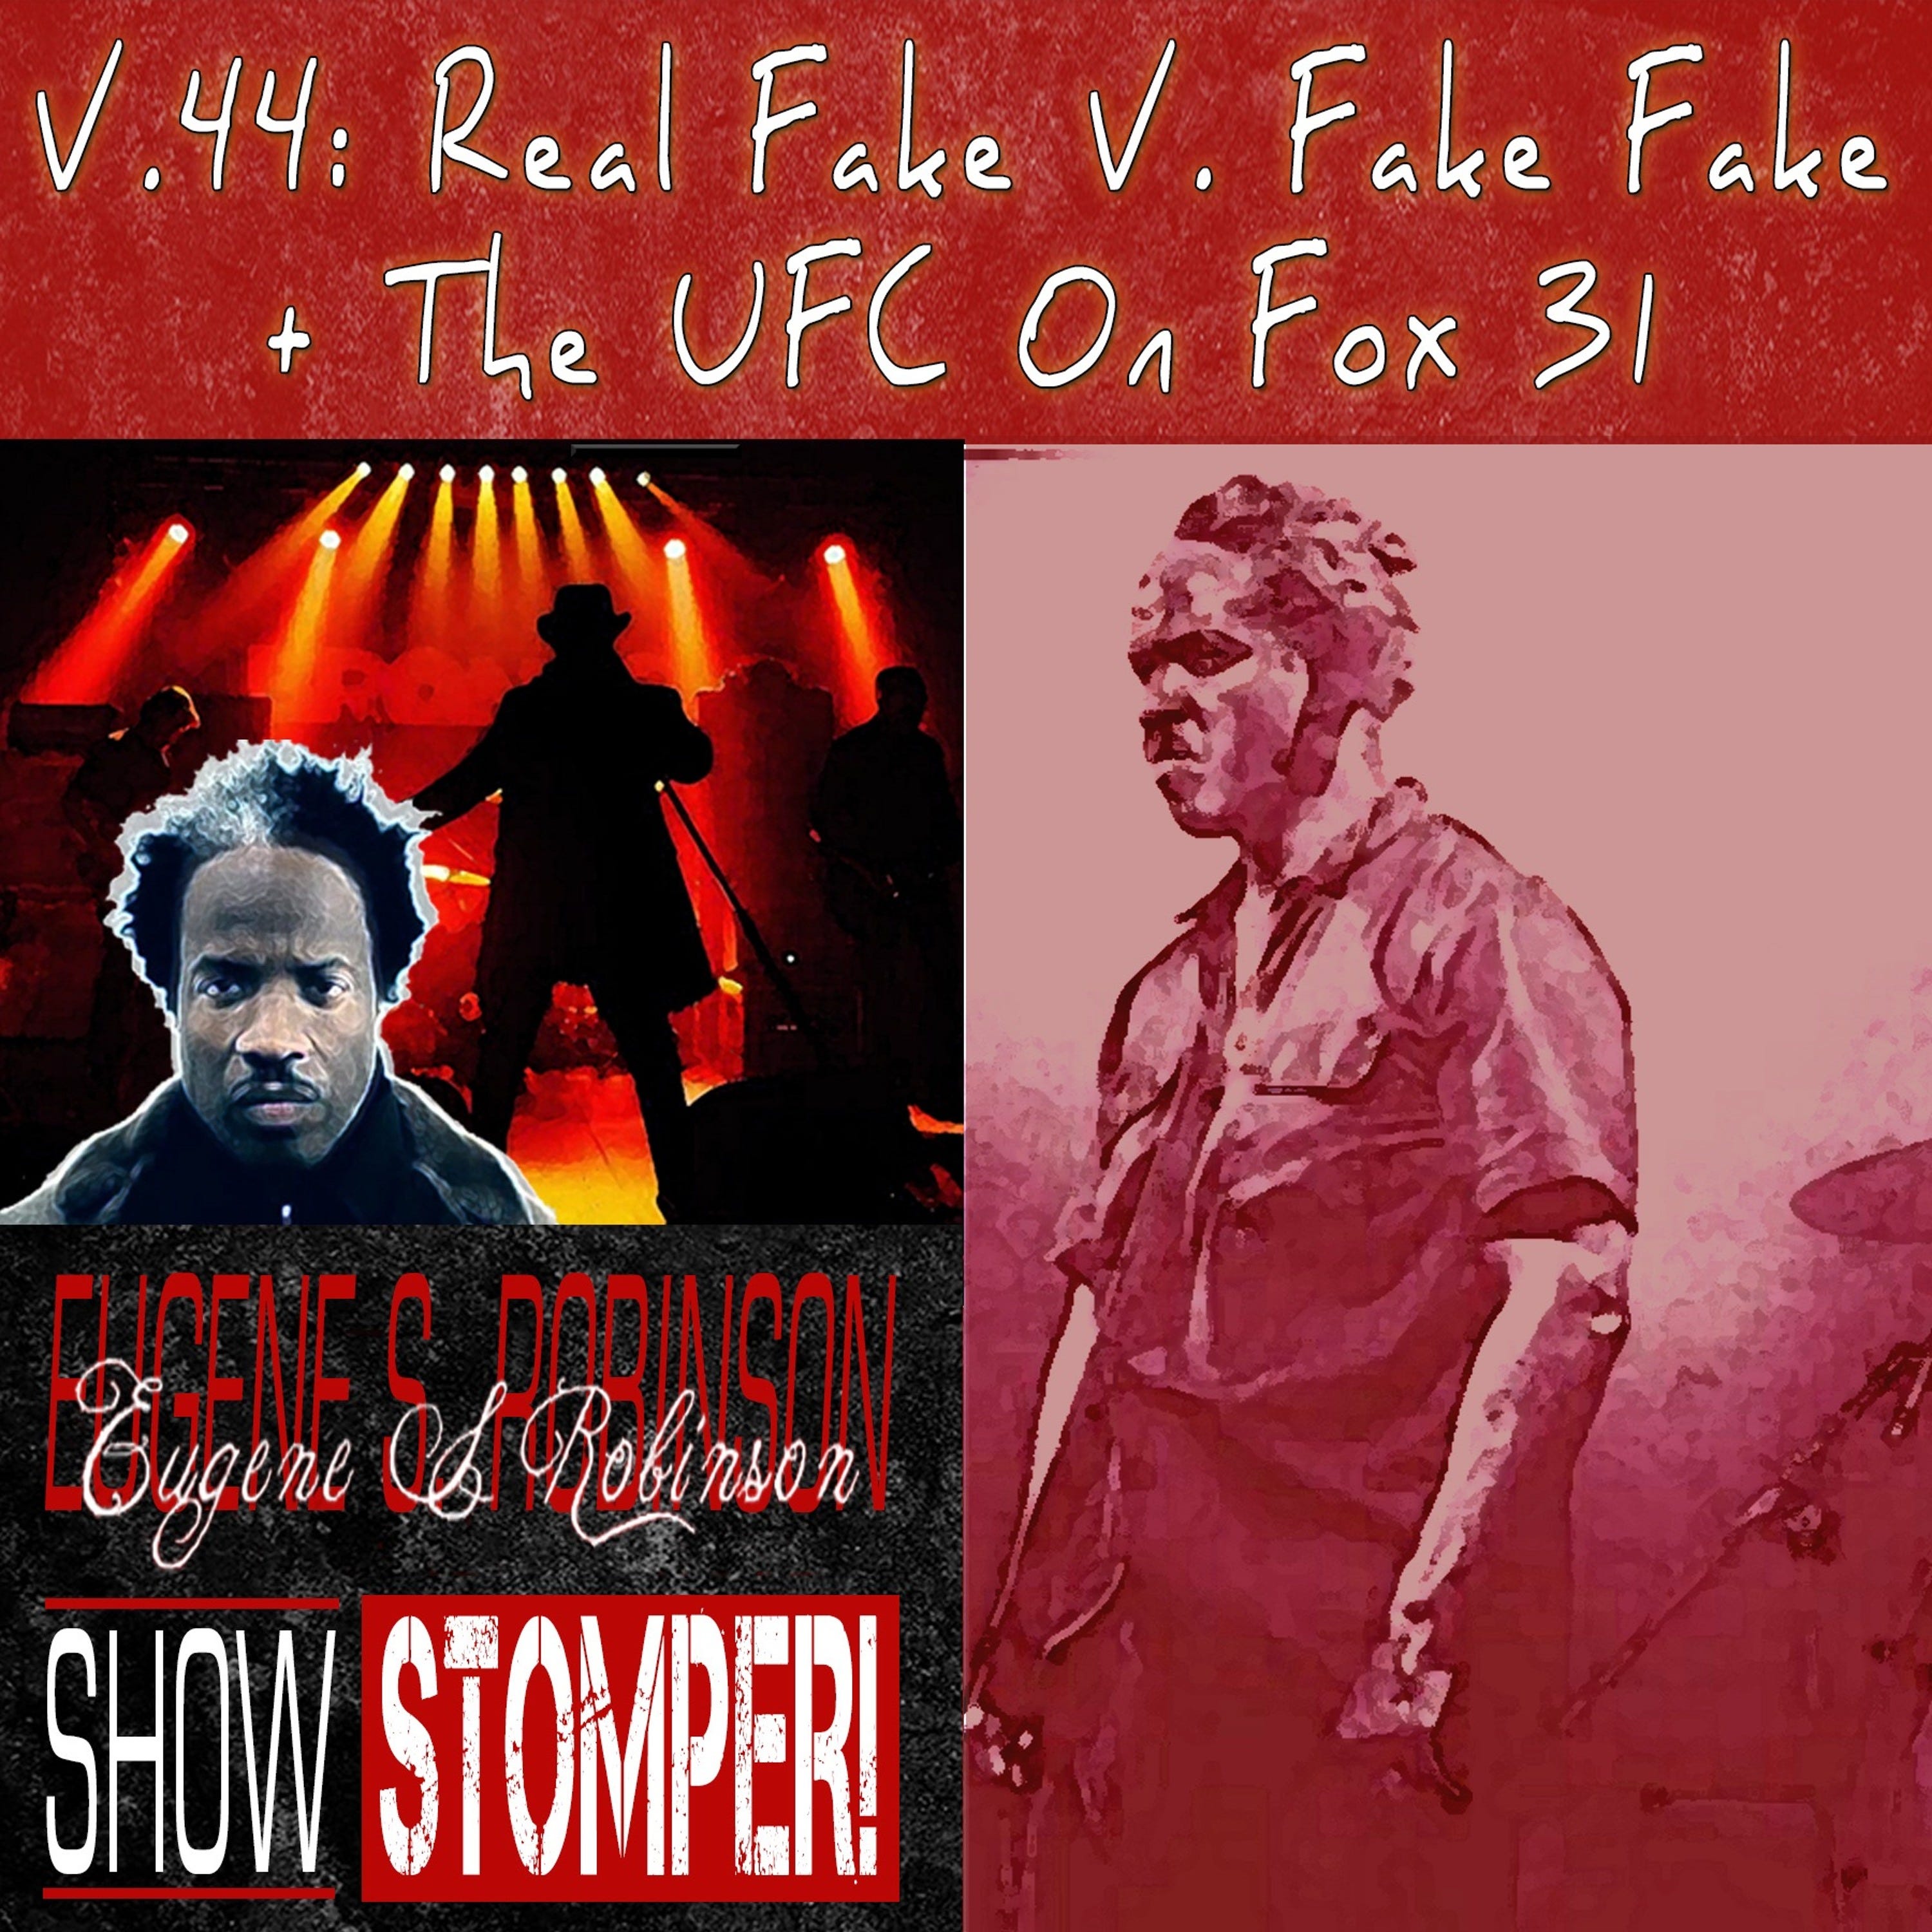 The Eugene S. Robinson Show Stomper! - V.44 Real Fake V. Fake Fake + The UFC On Fox 31